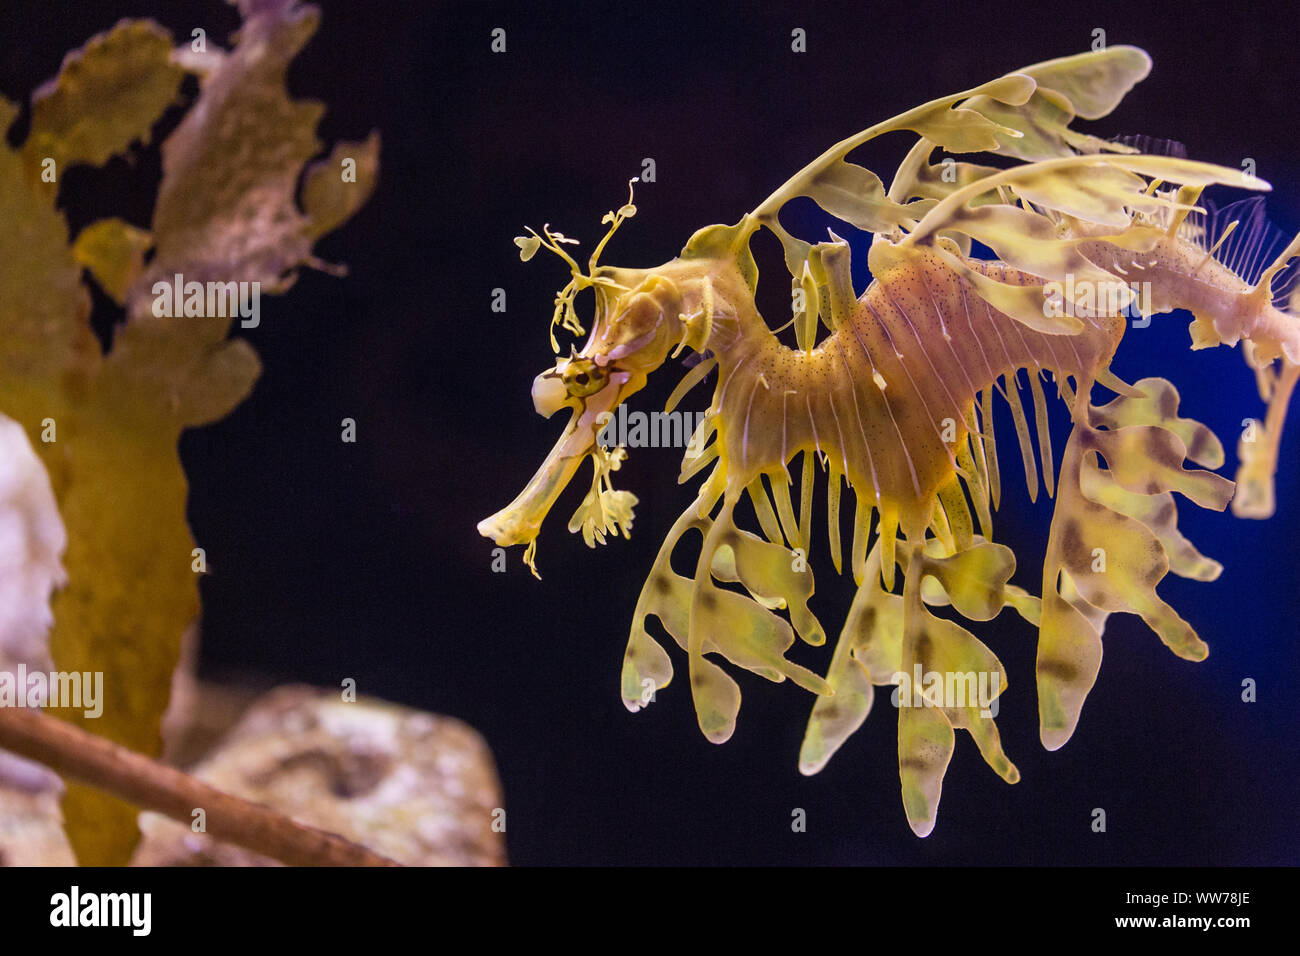 Leafy Seadragon or Glauert's Seadragon (Phycodurus eques) at the Florida Aquarium in Tampa, Florida, USA. Stock Photo